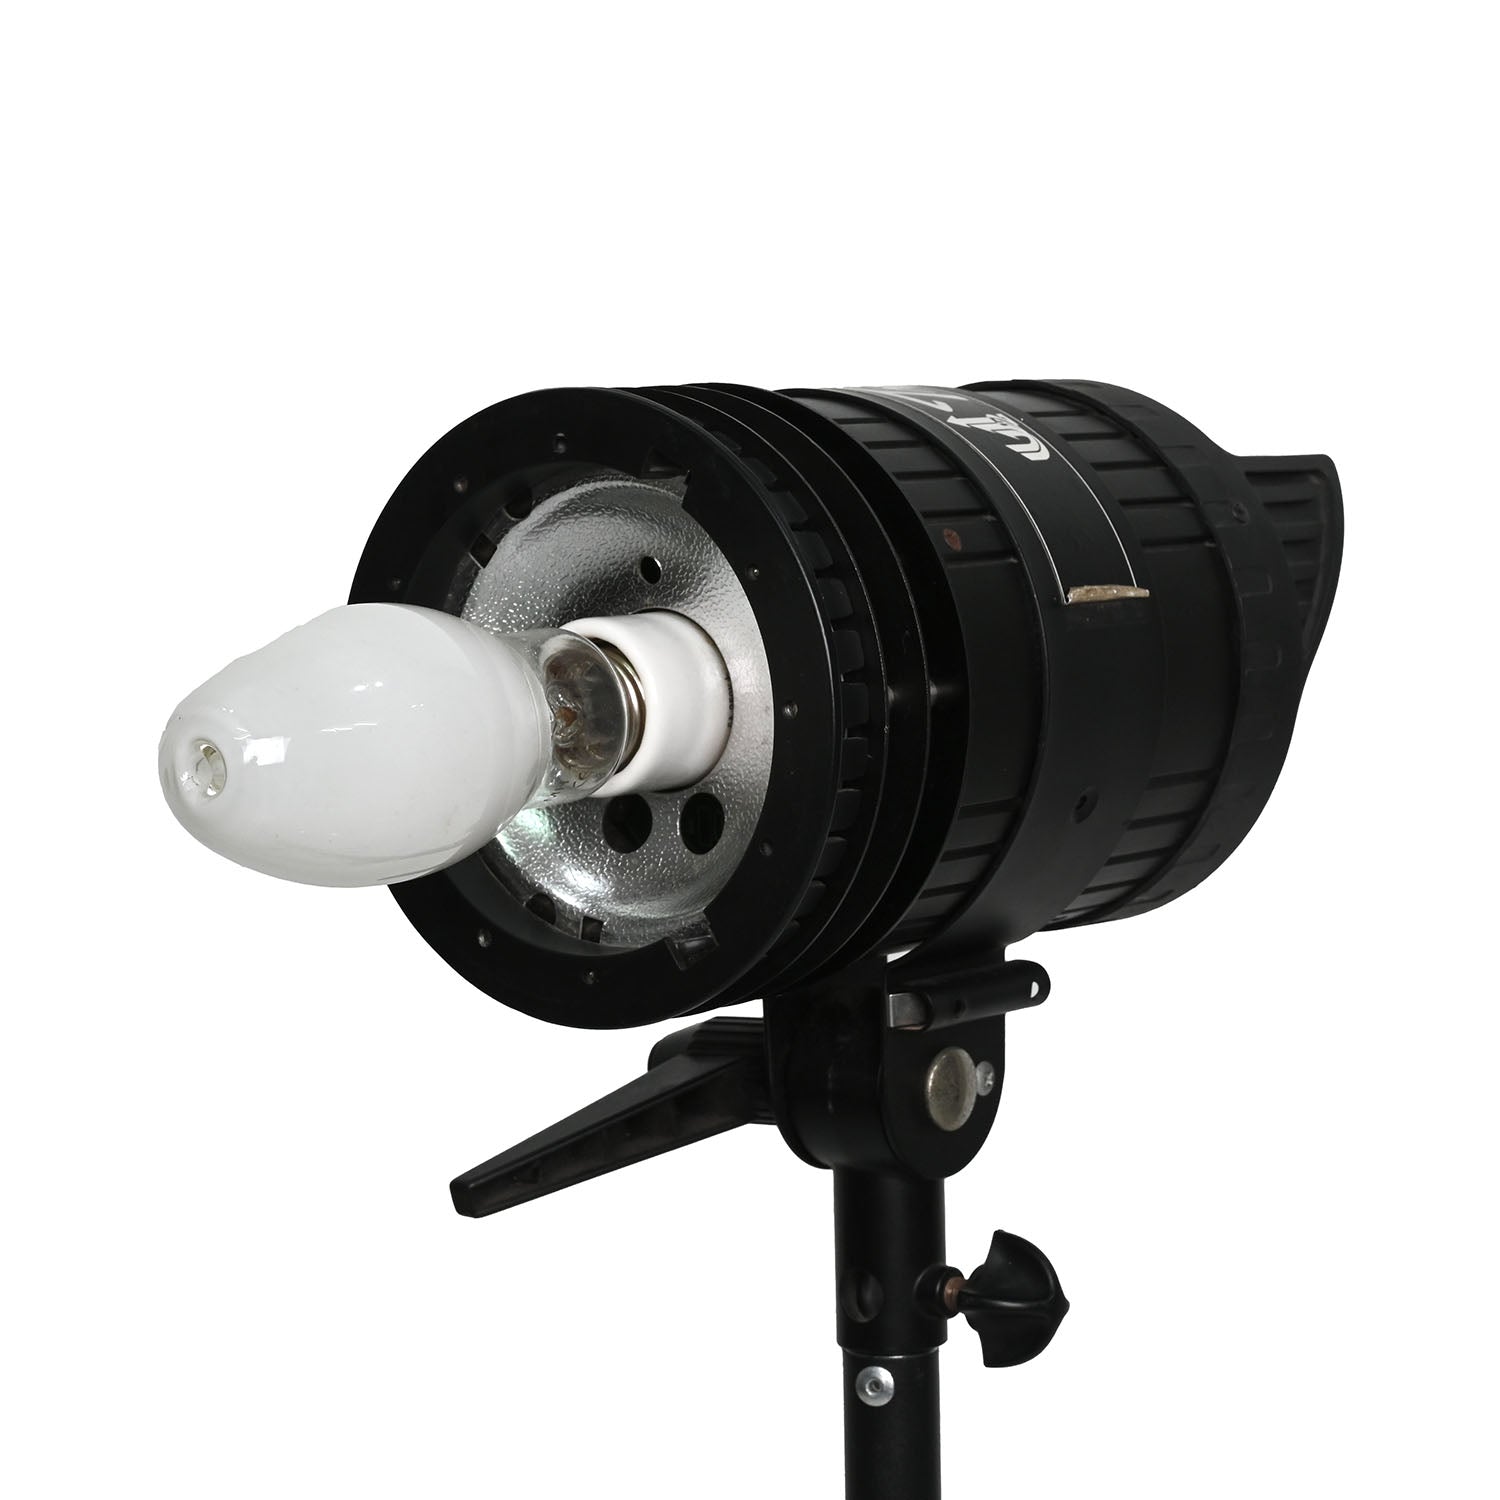 Tronic Aurora CCD-150W Video Light